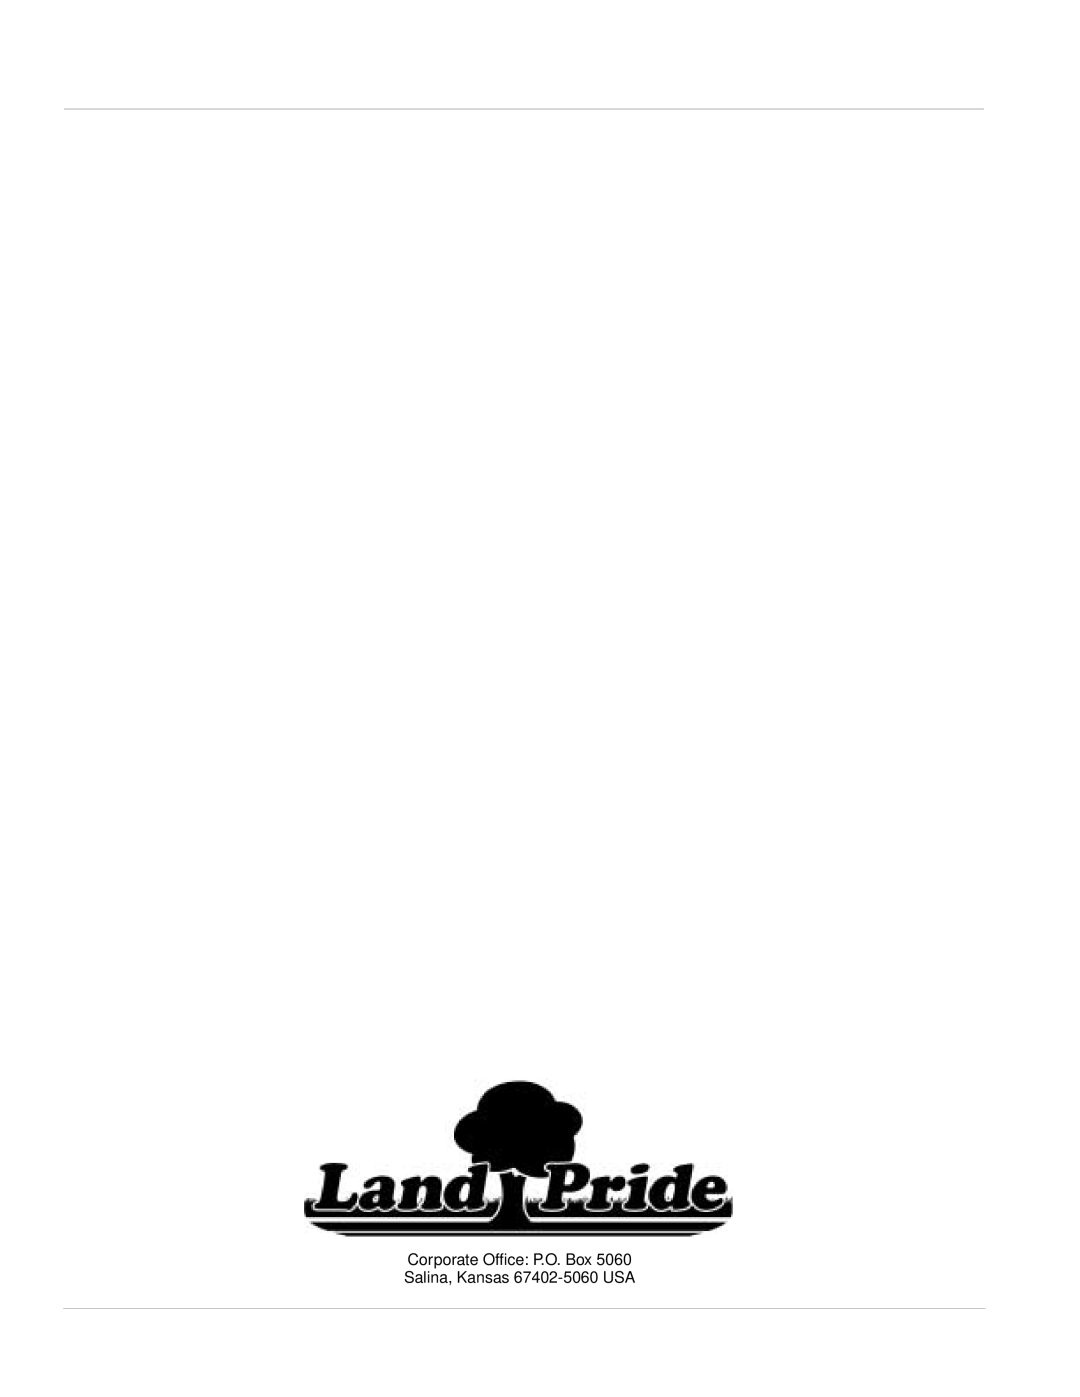 Land Pride fd1548 manual Corporate Ofﬁce P.O. Box 5060 Salina, Kansas 67402-5060 USA 